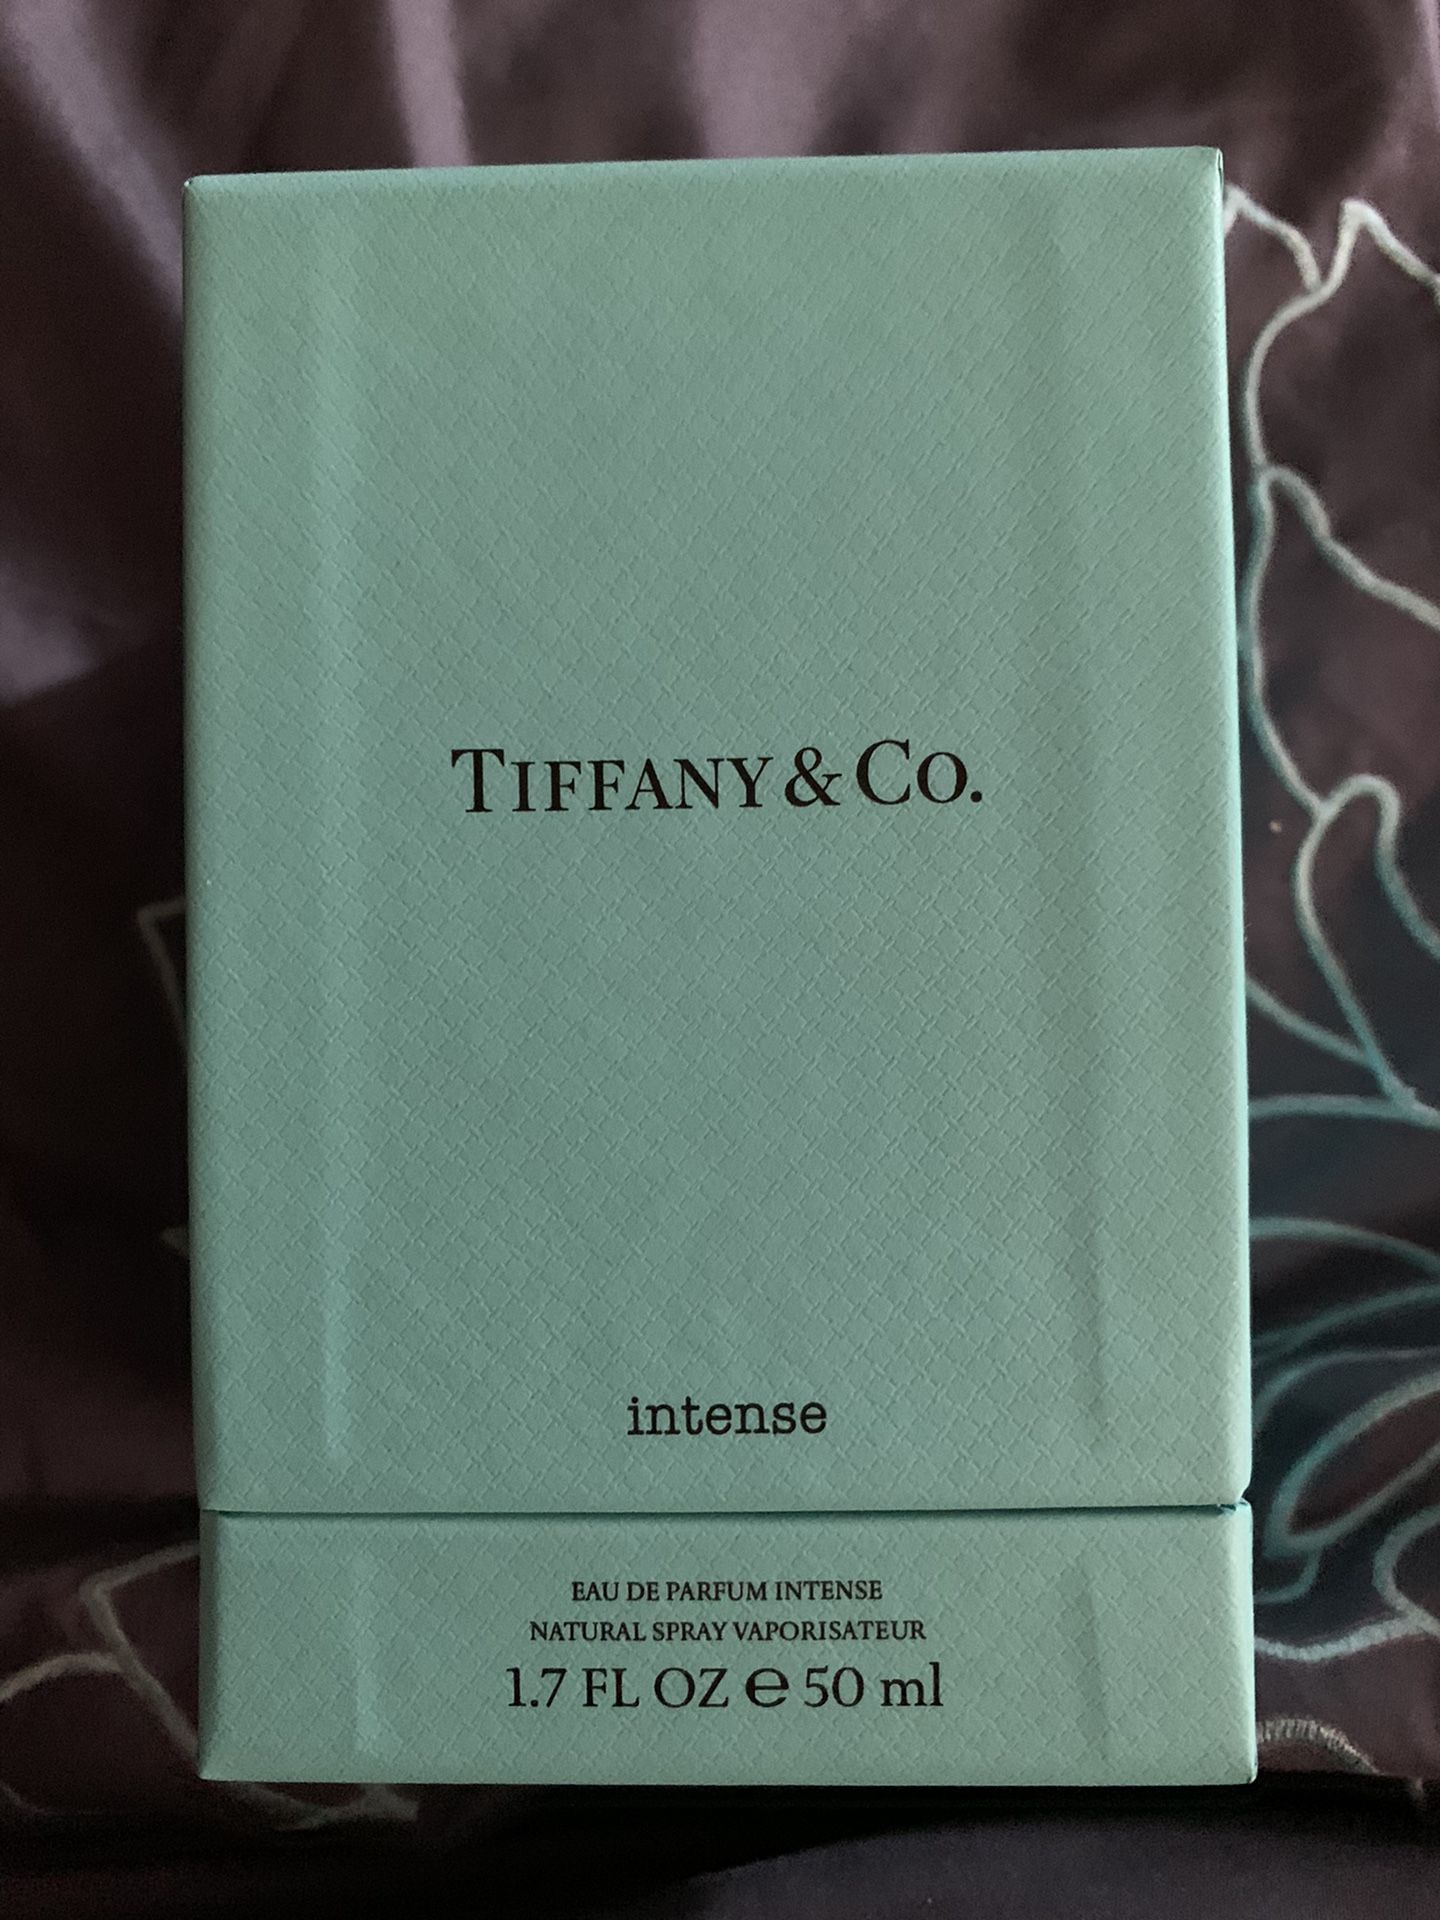 Brand new unopened bottle of Tiffany Intense.